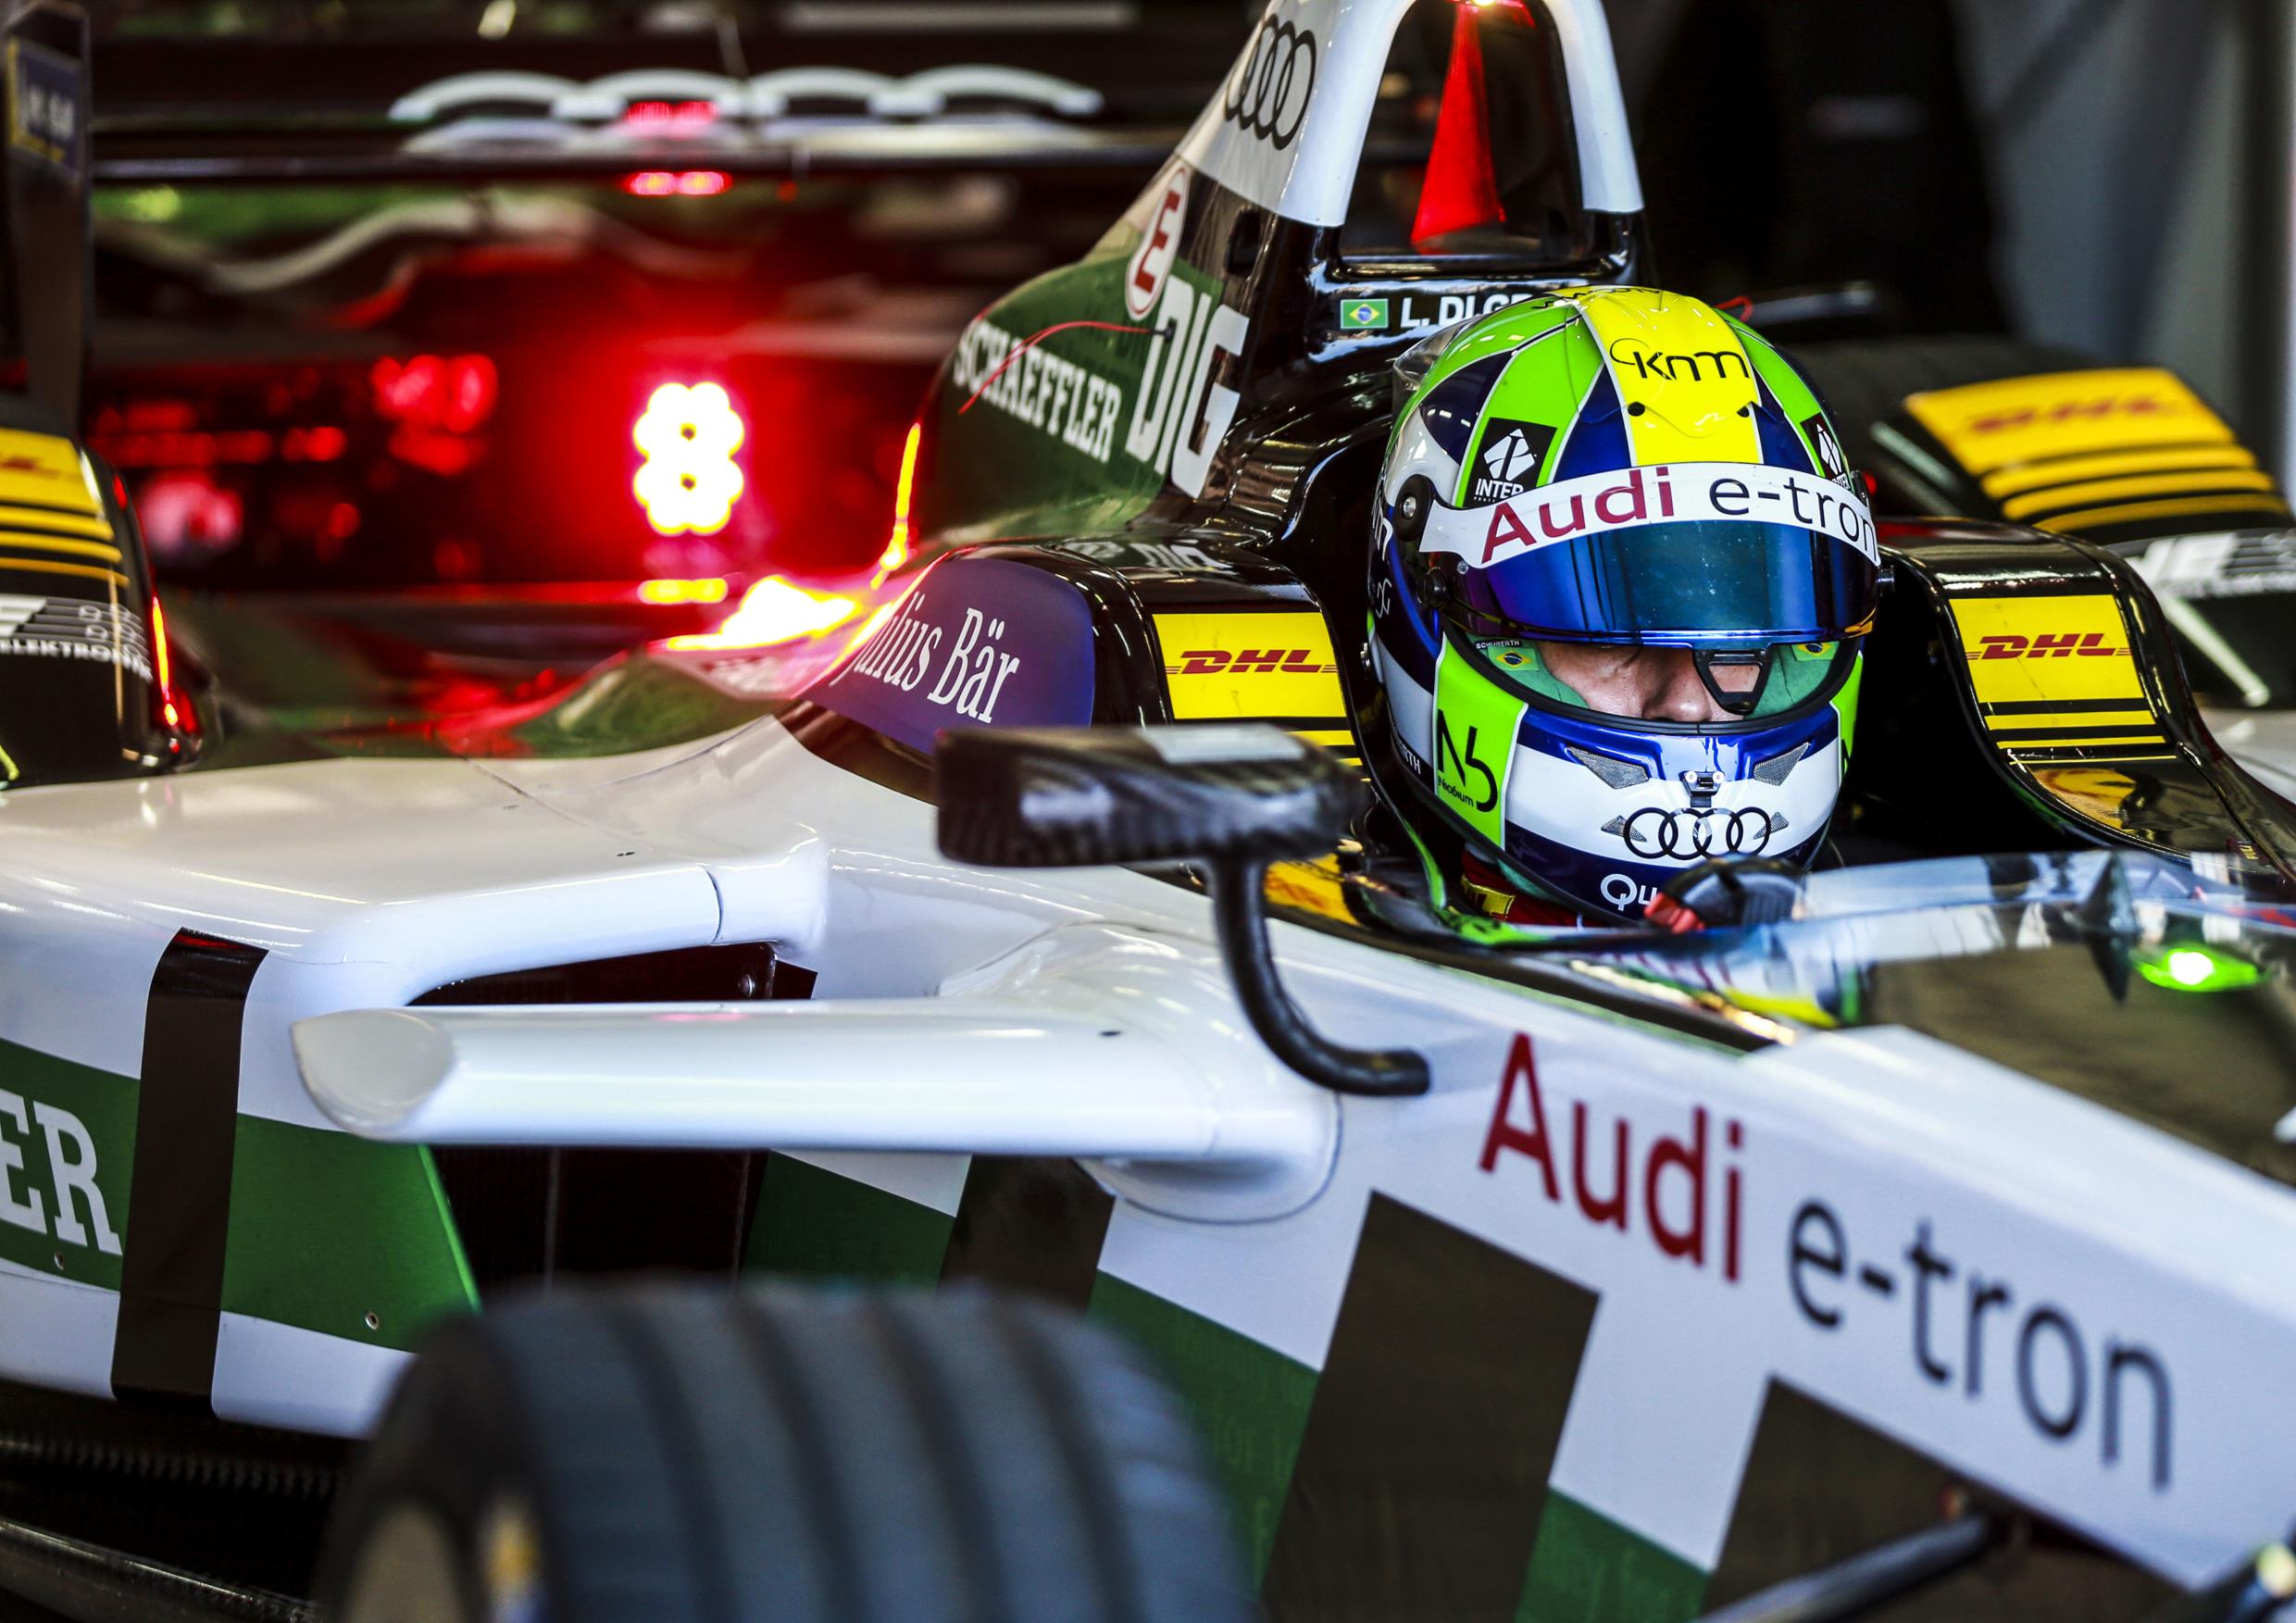 AUDI debuta oficialmente en la Fórmula E